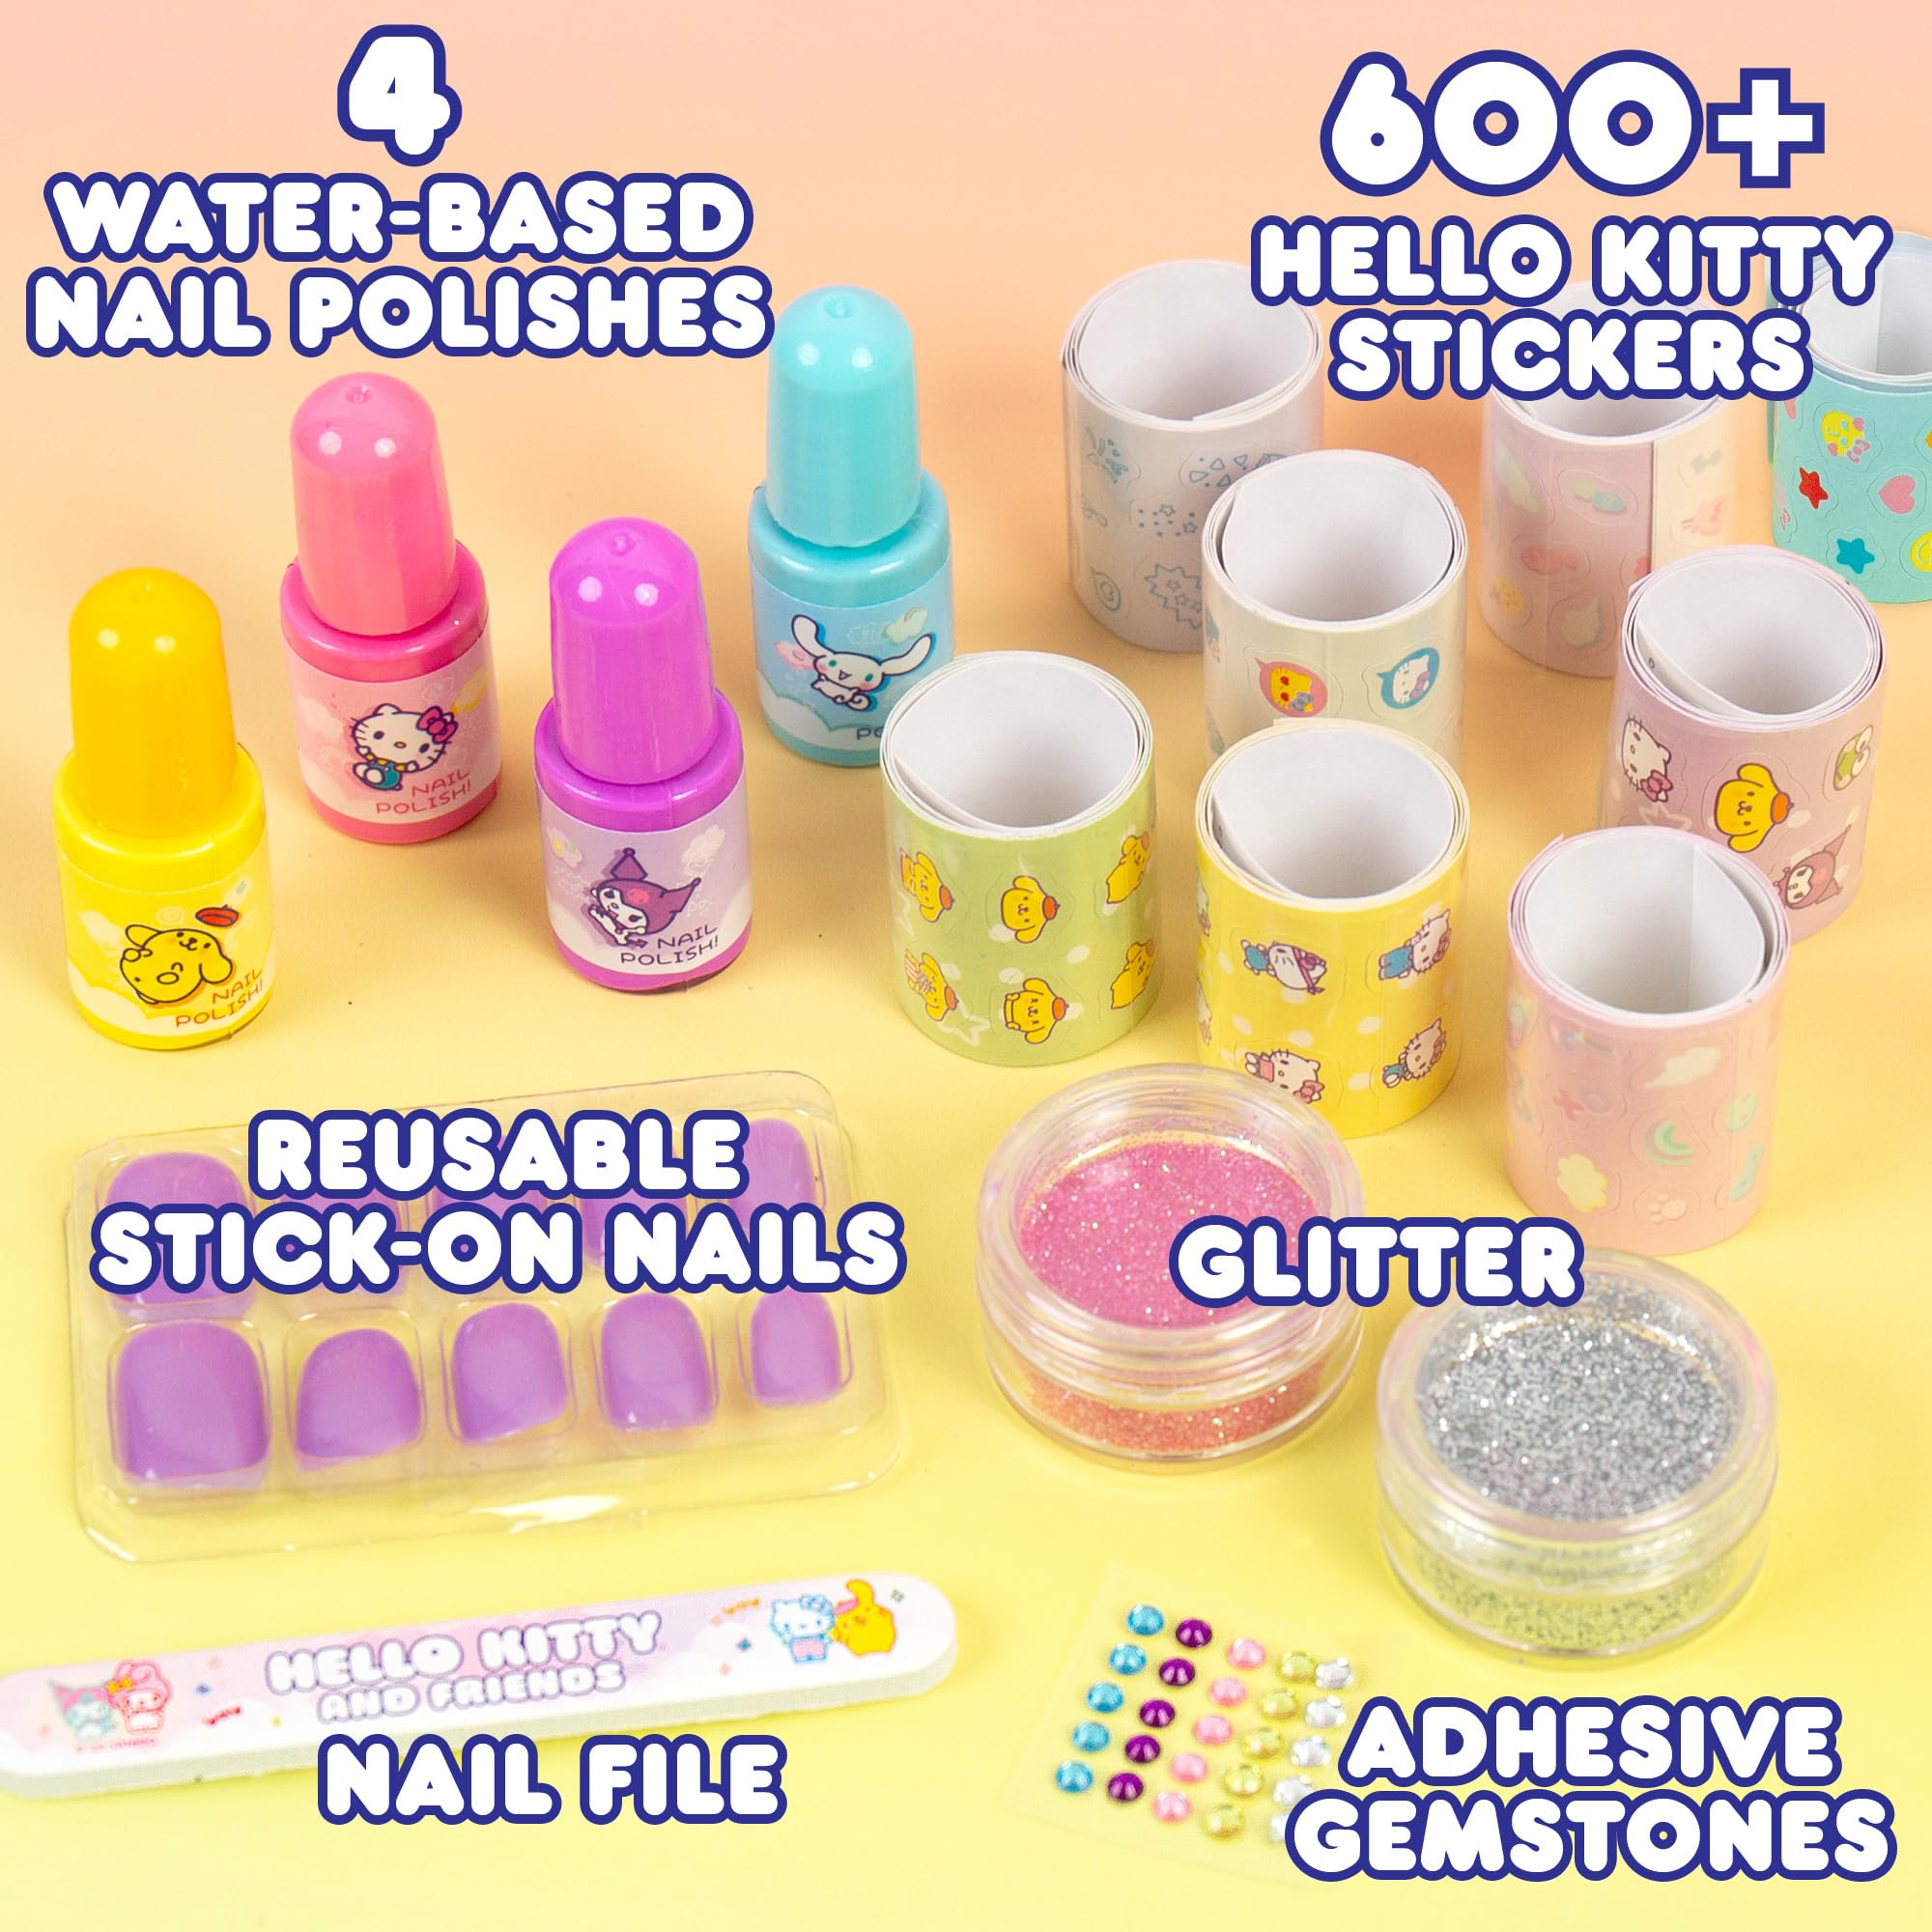 Hello Kitty and Friends Sparkling Nail Art Kit, DIY Hello Kitty Nails, Kids Nail Polish Set for Girls, Kids Makeup Set & Toy for Girls Age 6+, Hello Kitty and Friends Nail Stickers